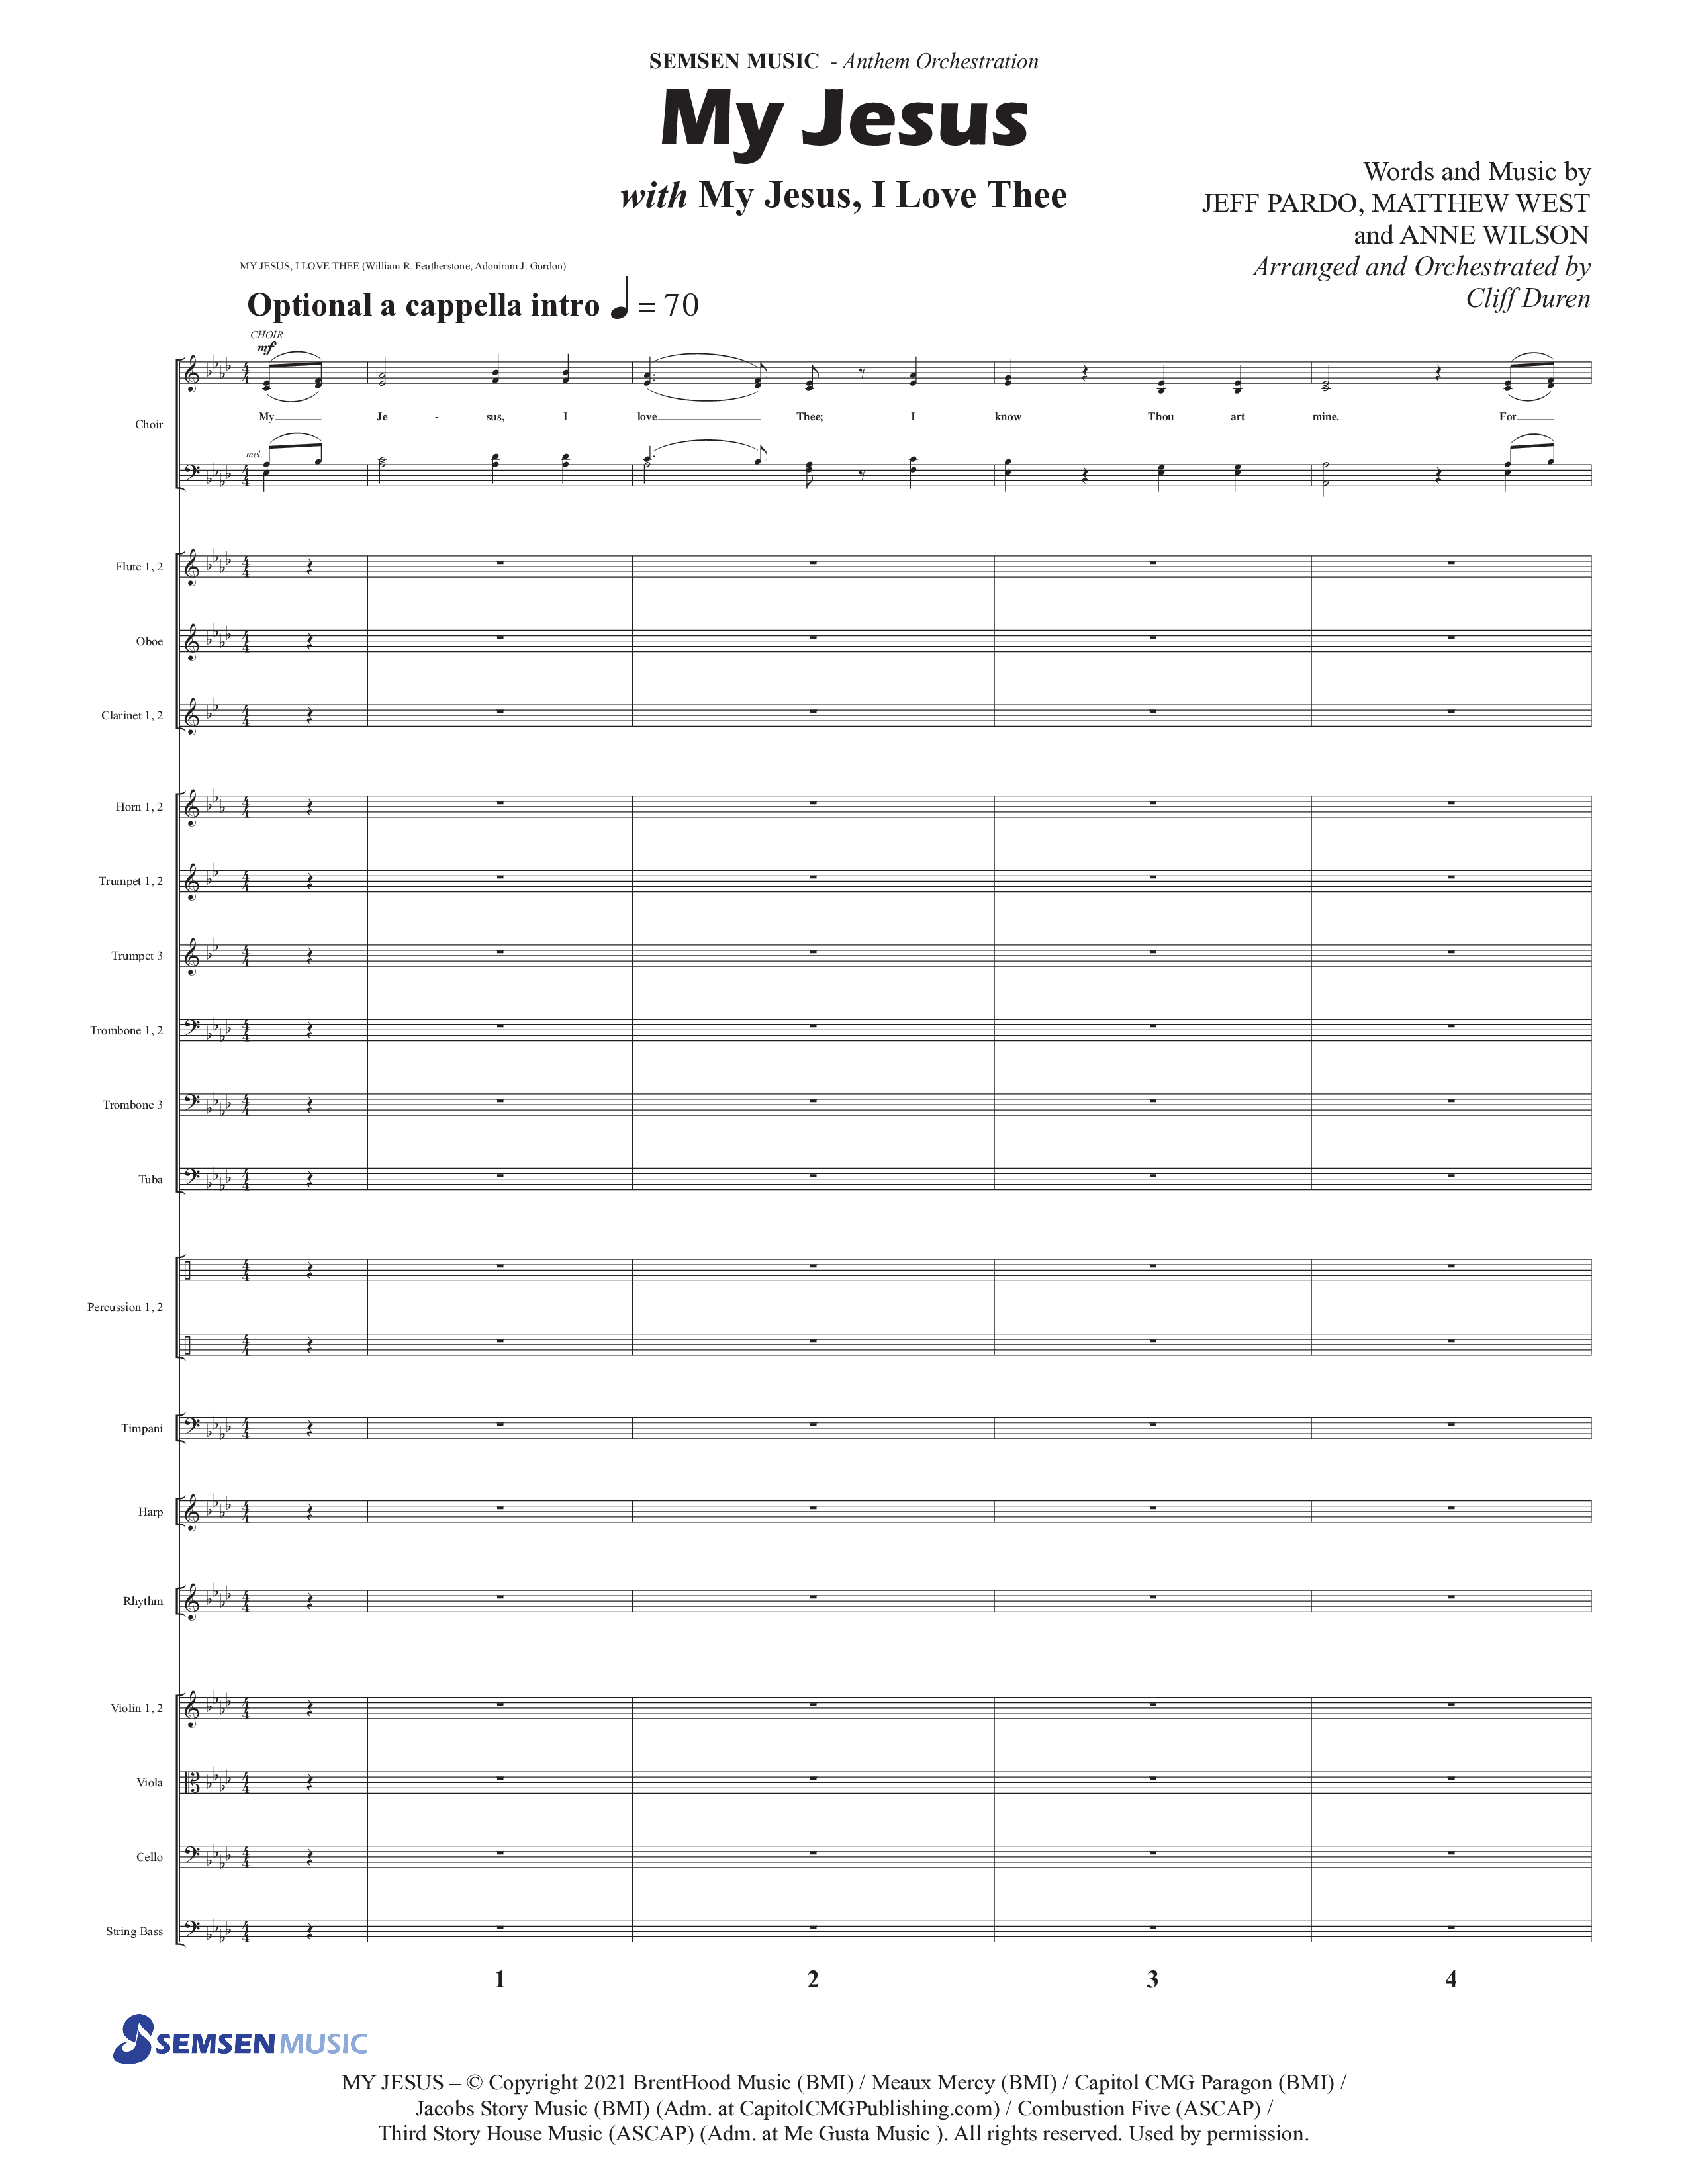 My Jesus (with My Jesus I Love Thee) (Choral Anthem SATB) Orchestration (Semsen Music / Arr. Cliff Duren)